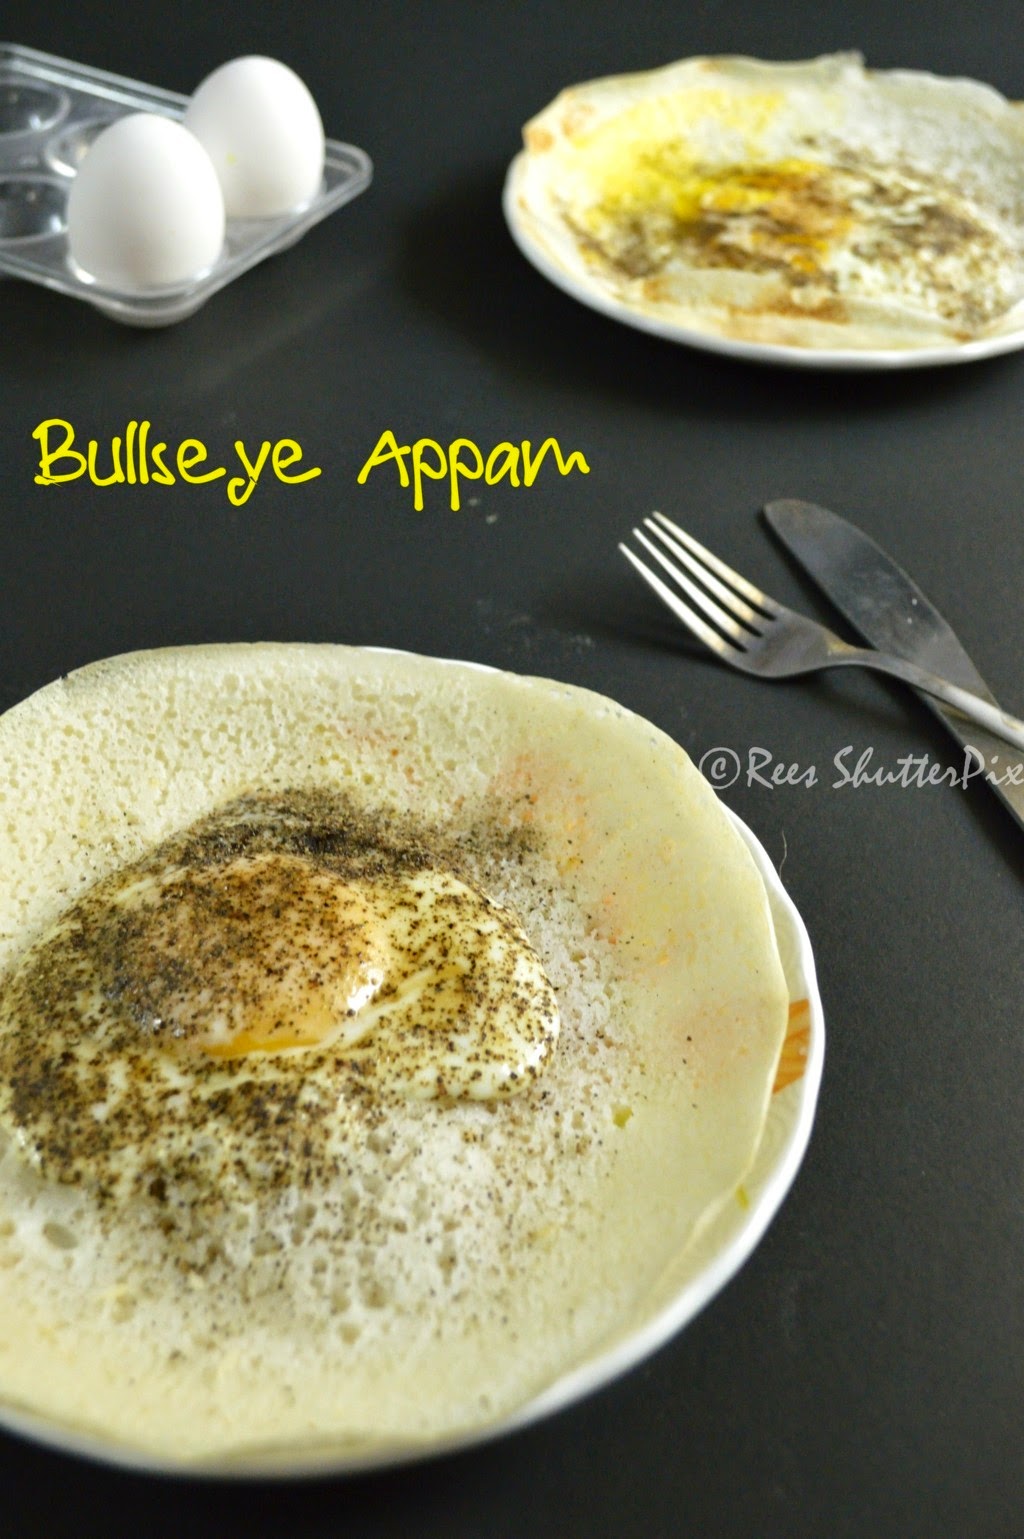 Breakfast Recipes, appam recipe, egg appam recipe, easy egg appam, bullseye appam recipe, how to make egg appam, egg on appam, srilankan egg appam recipe